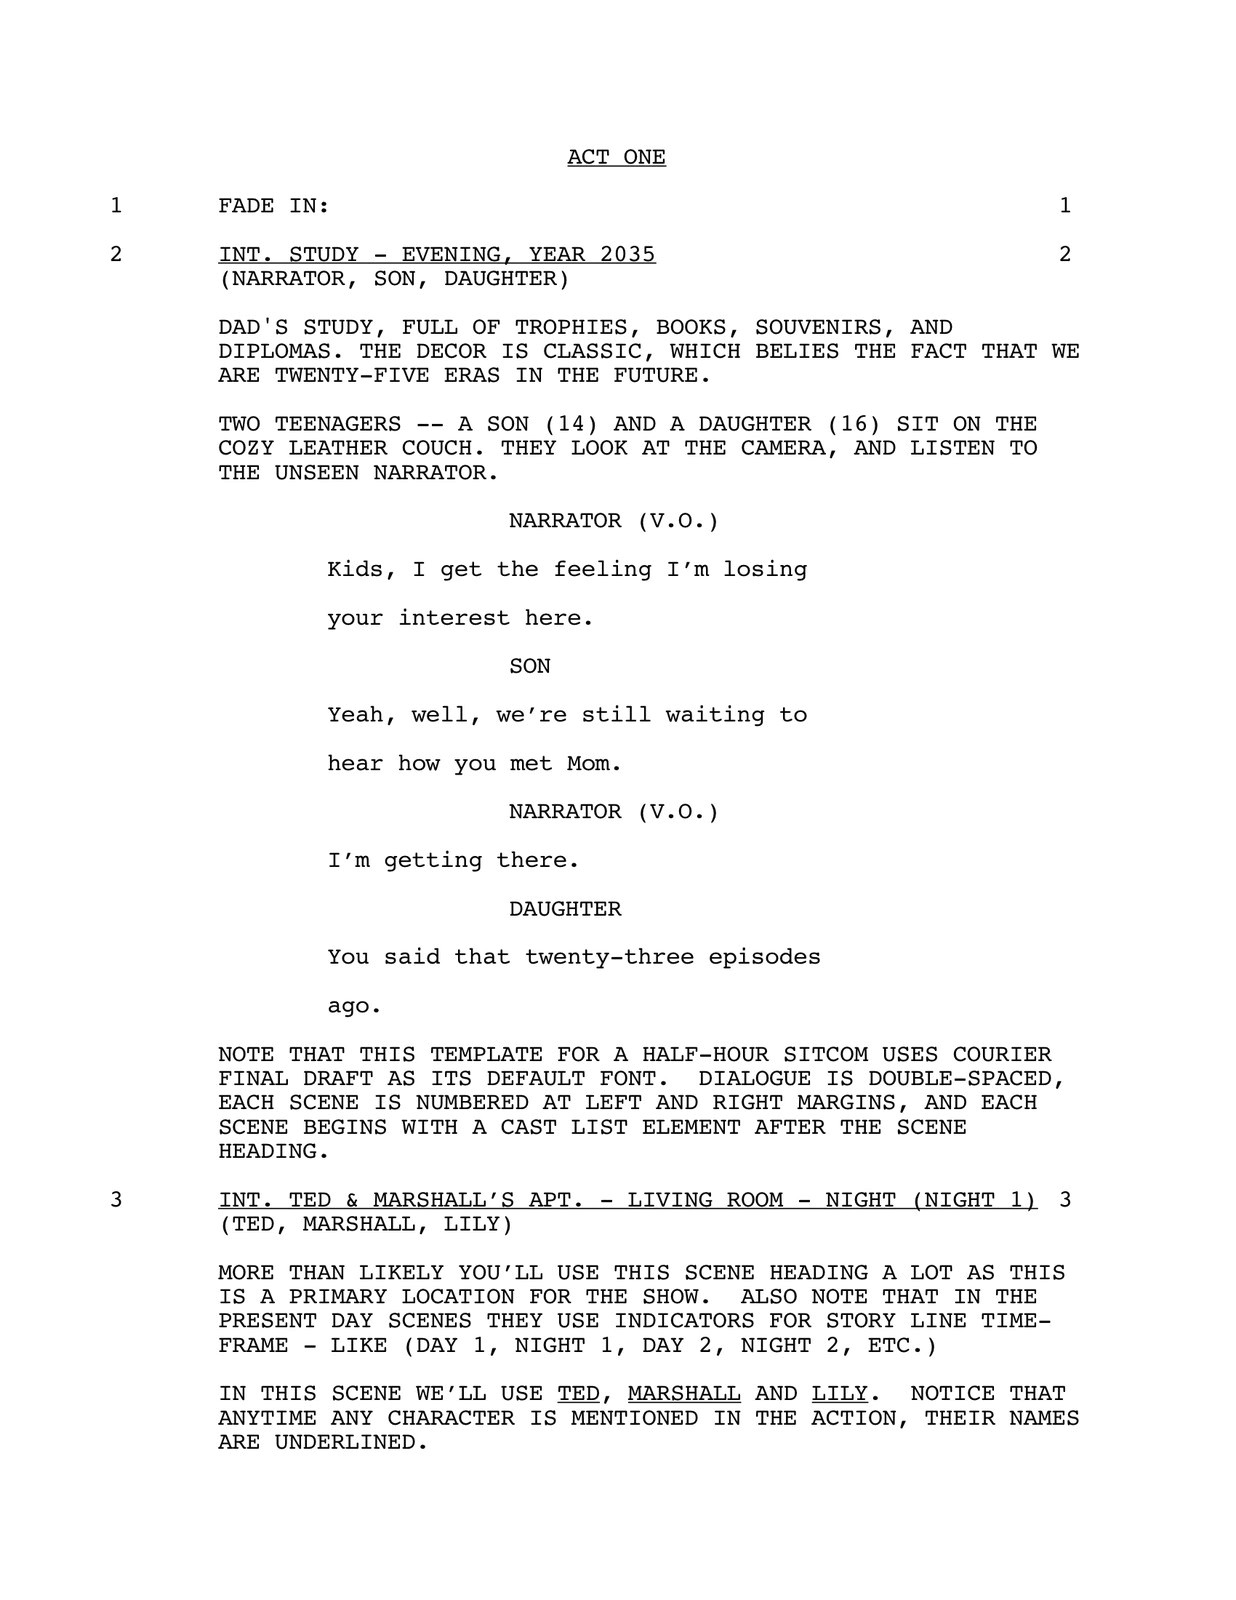 movie script template